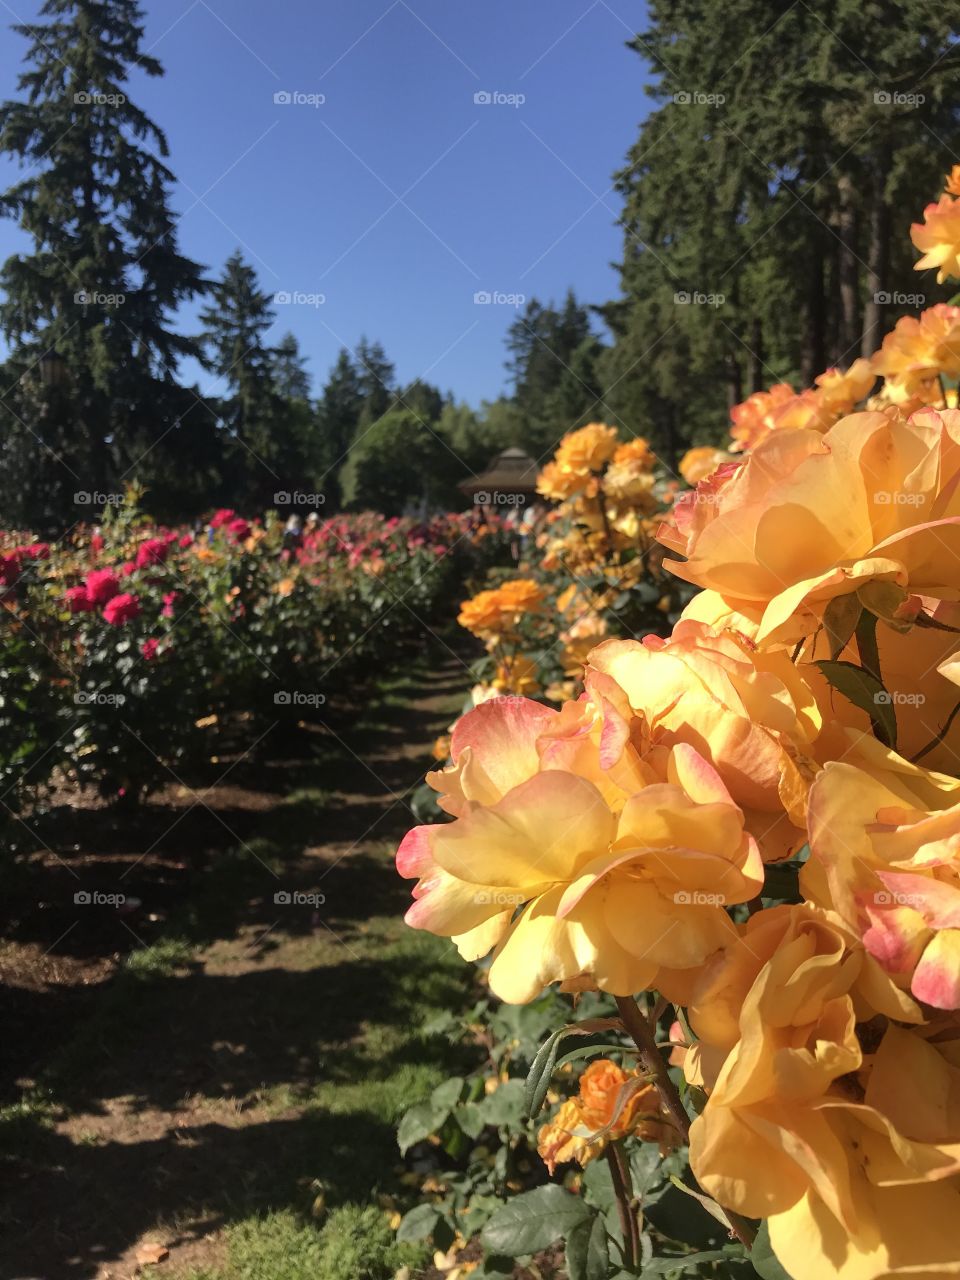 Rose garden in Portland, Oregon